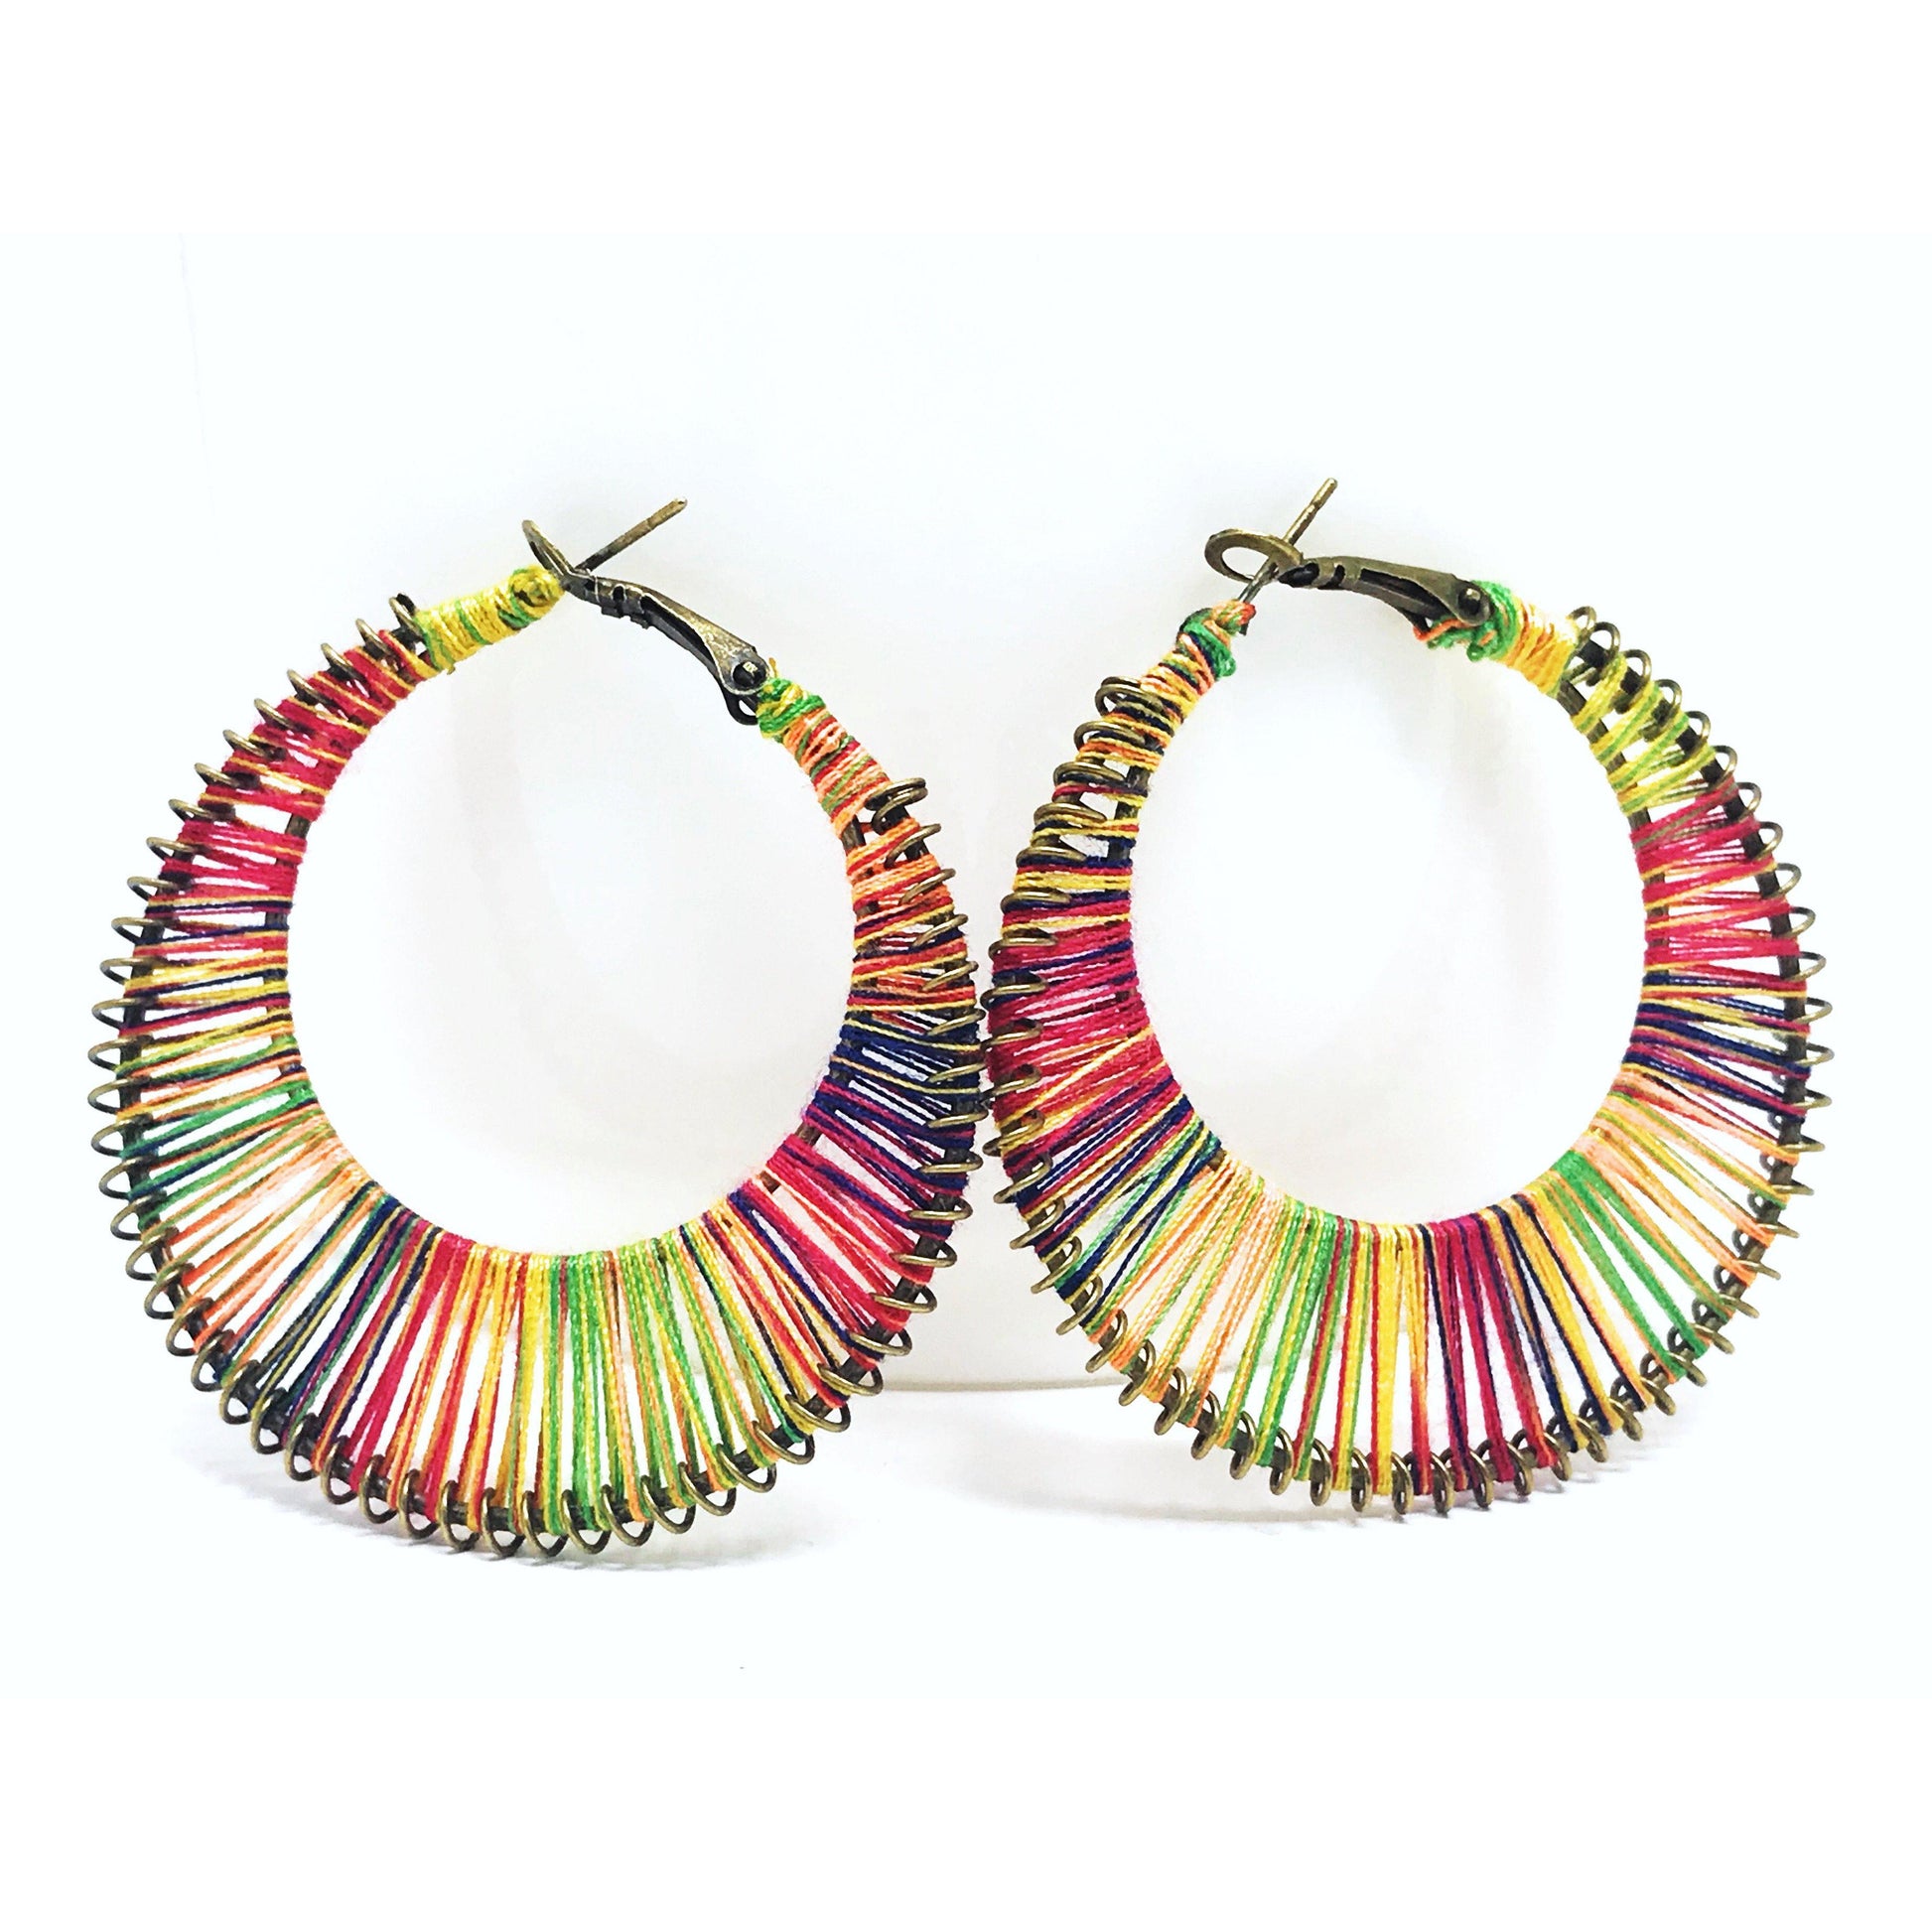 Multi-Colored String Hoop Earrings - Vibrant & Playful Accessories